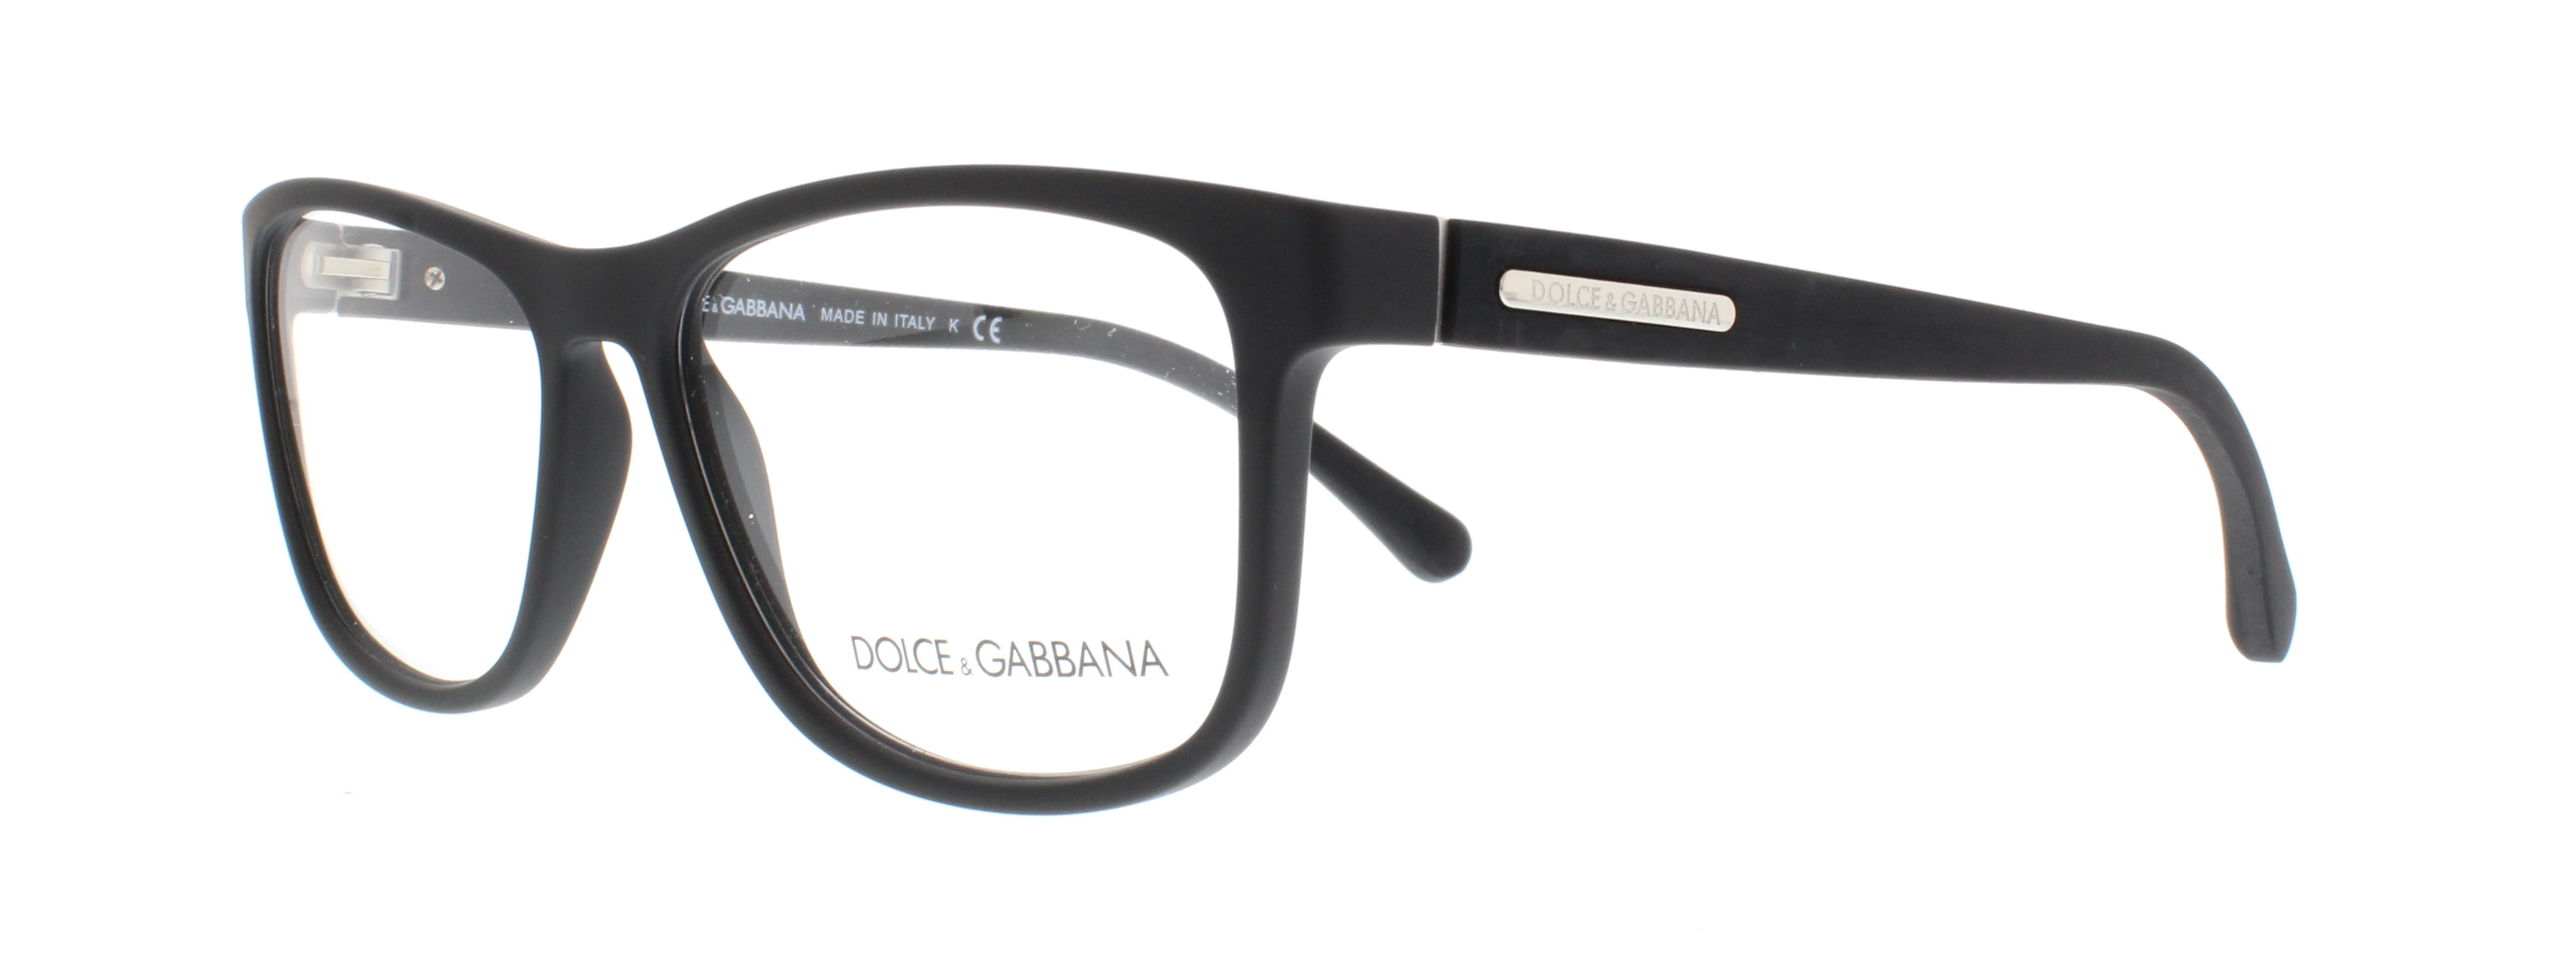 Picture of Dolce & Gabbana Eyeglasses DG5003